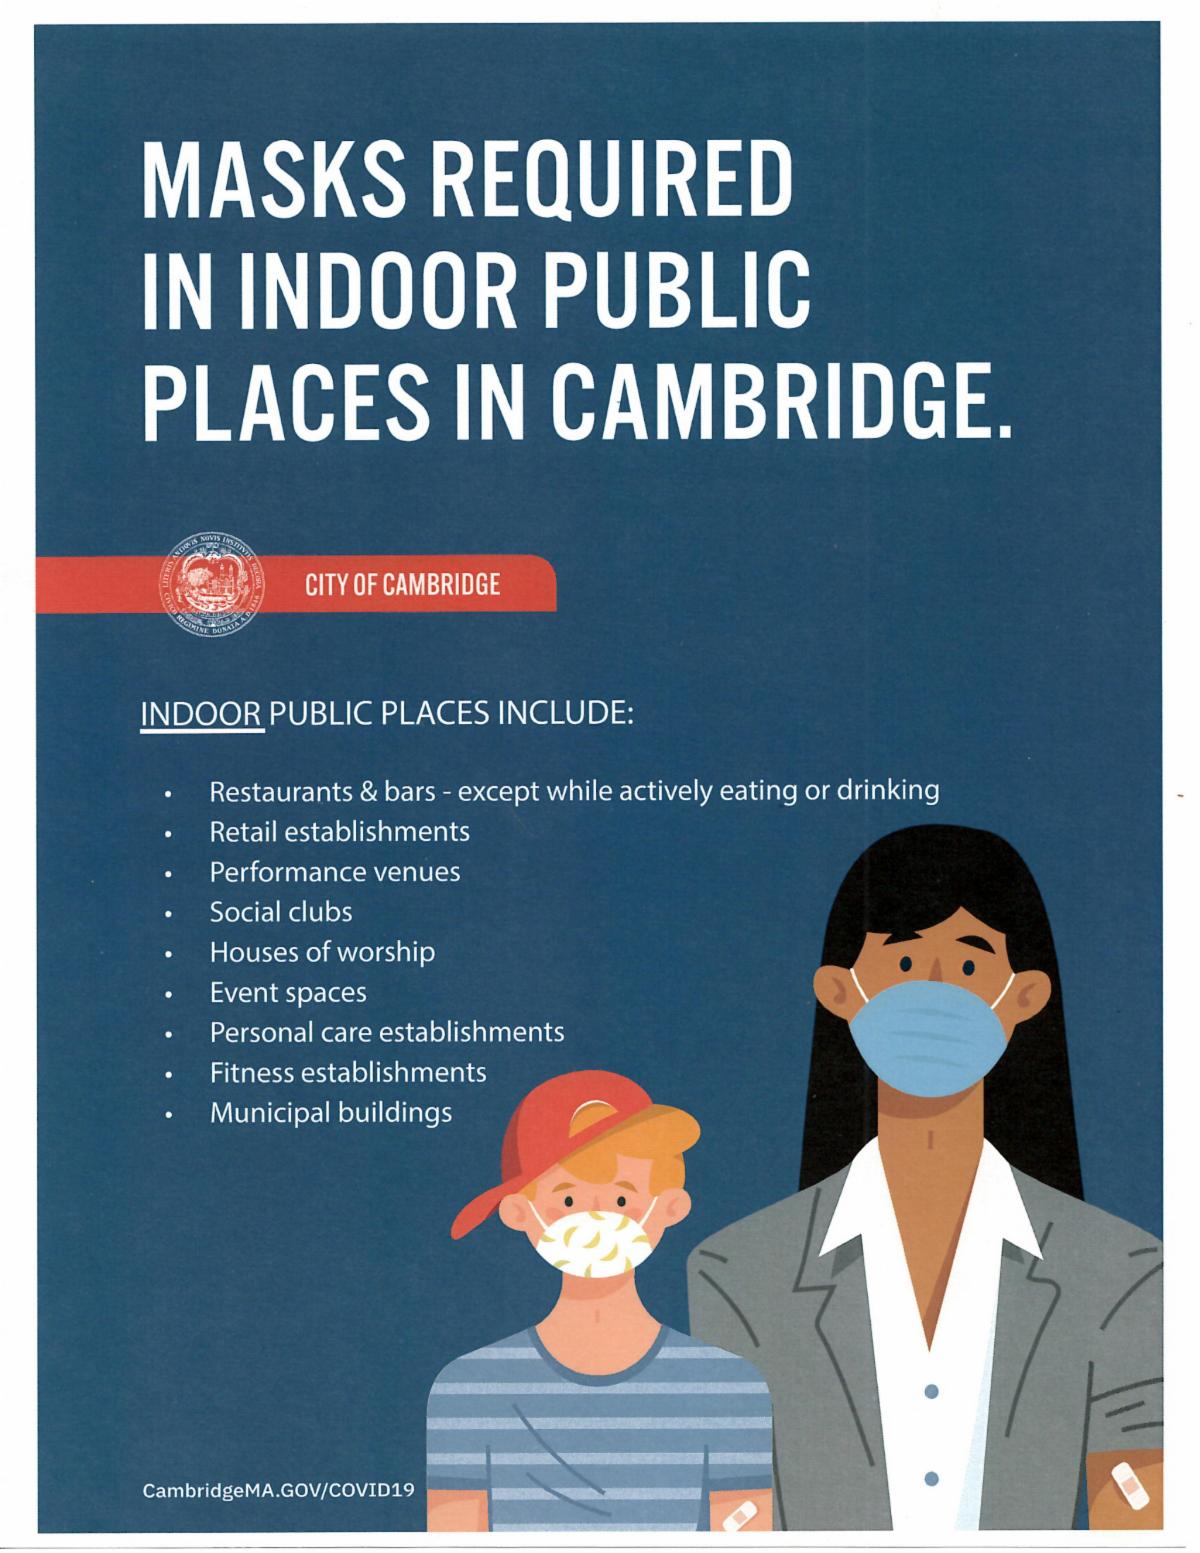 cambridge central square urgent care